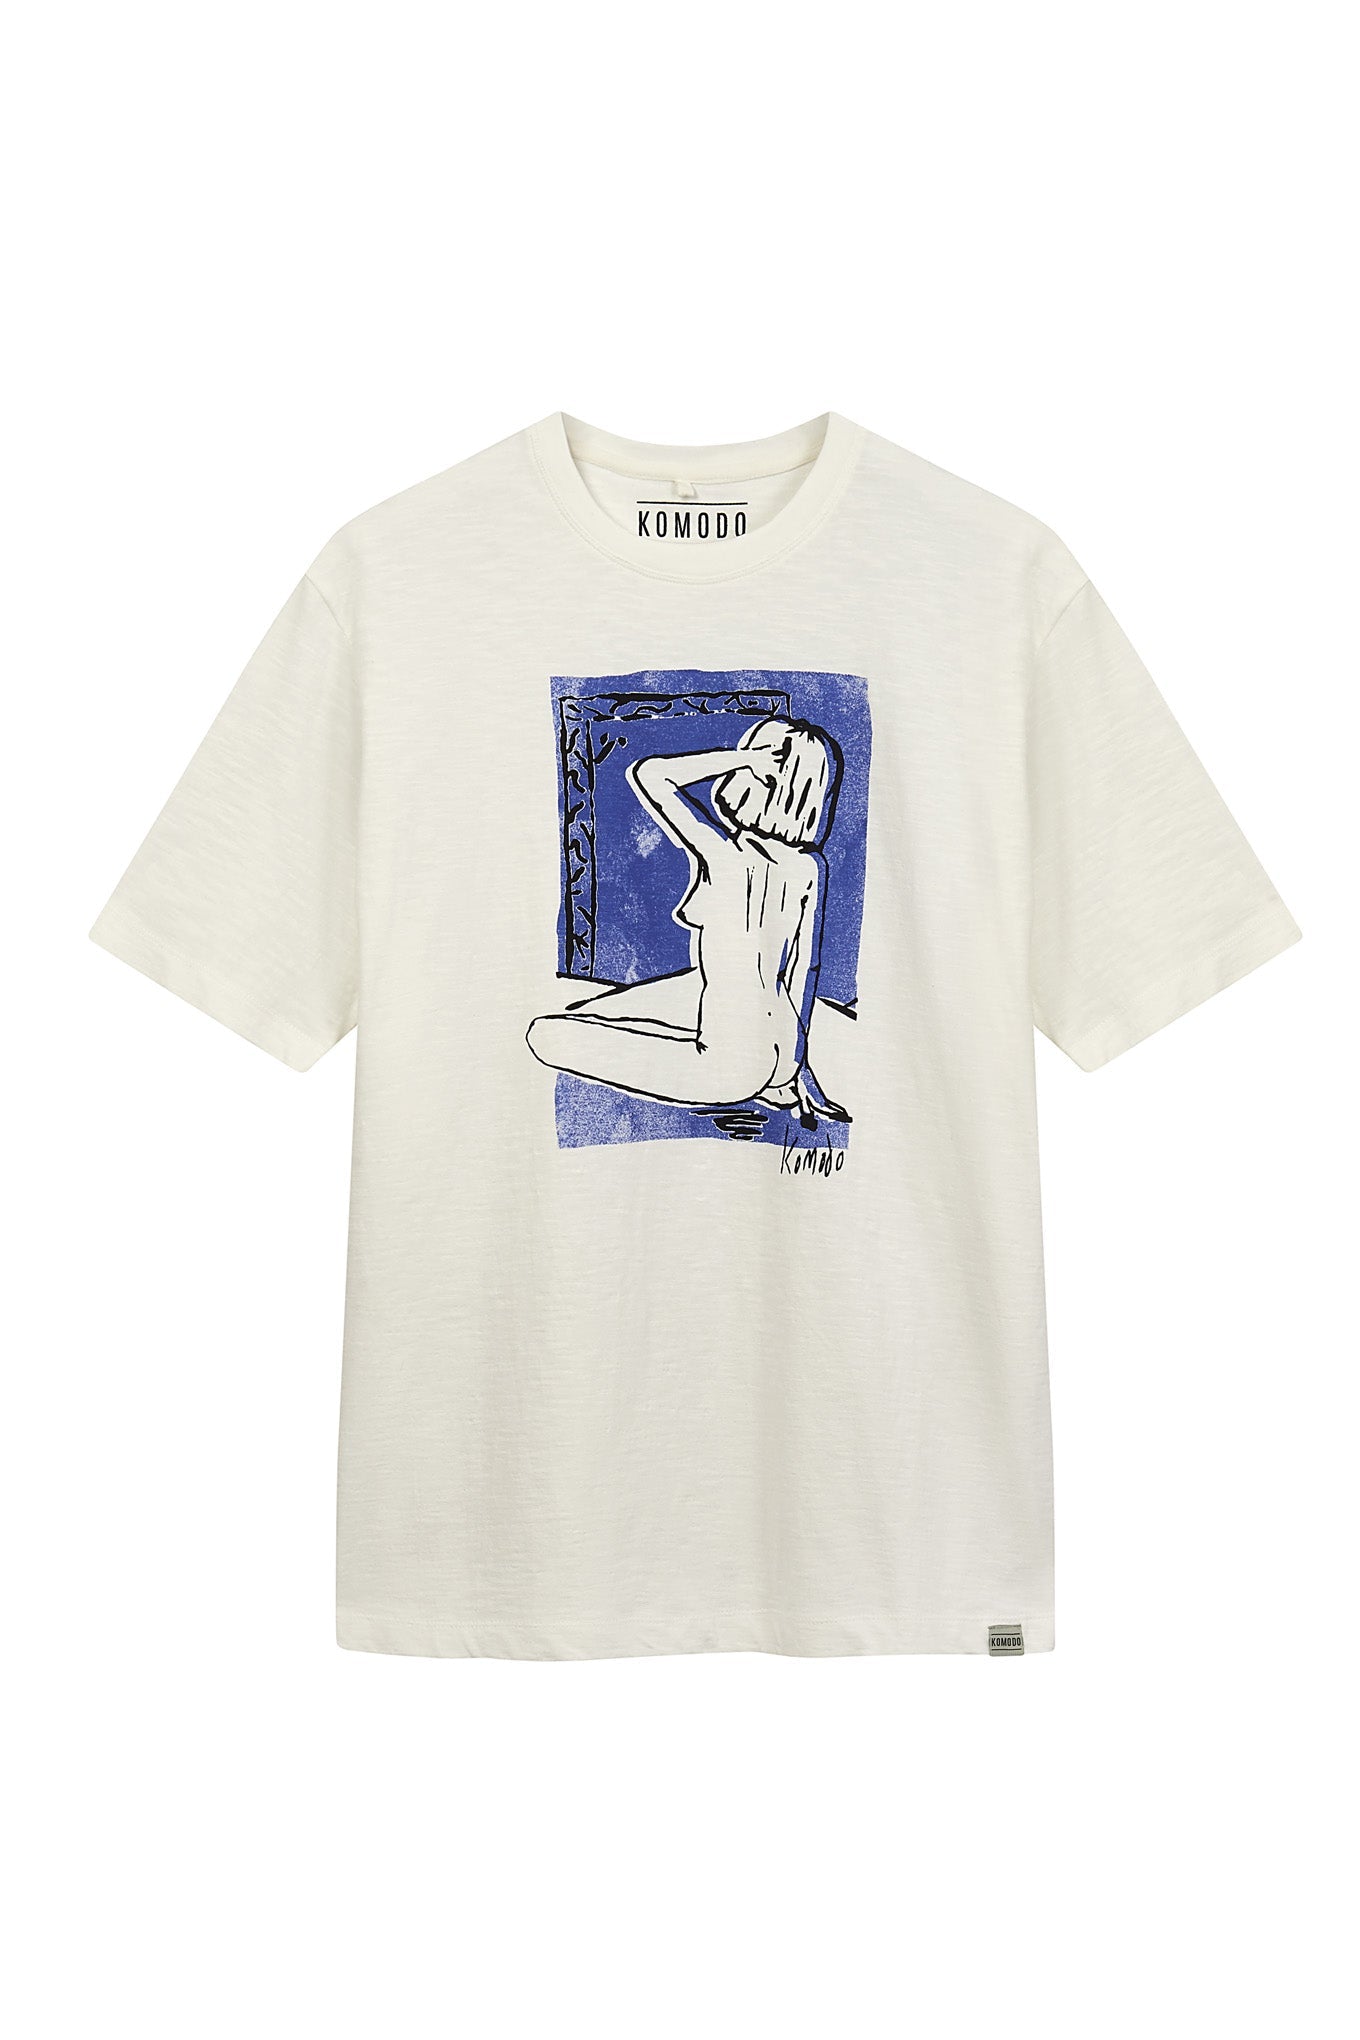 T-shirt CHEEKY blanc en coton biologique de Komodo